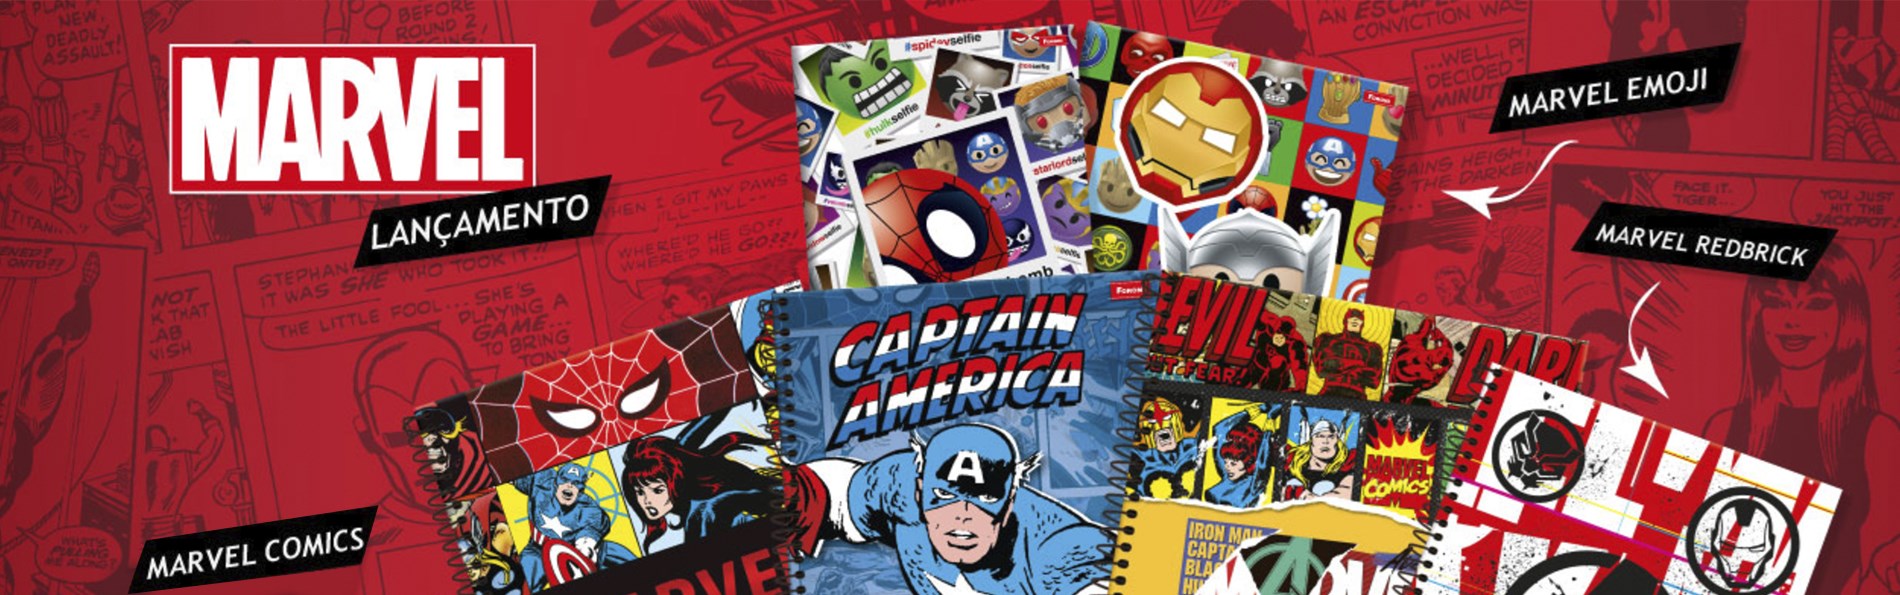 Marvel licensed products on Foroni website